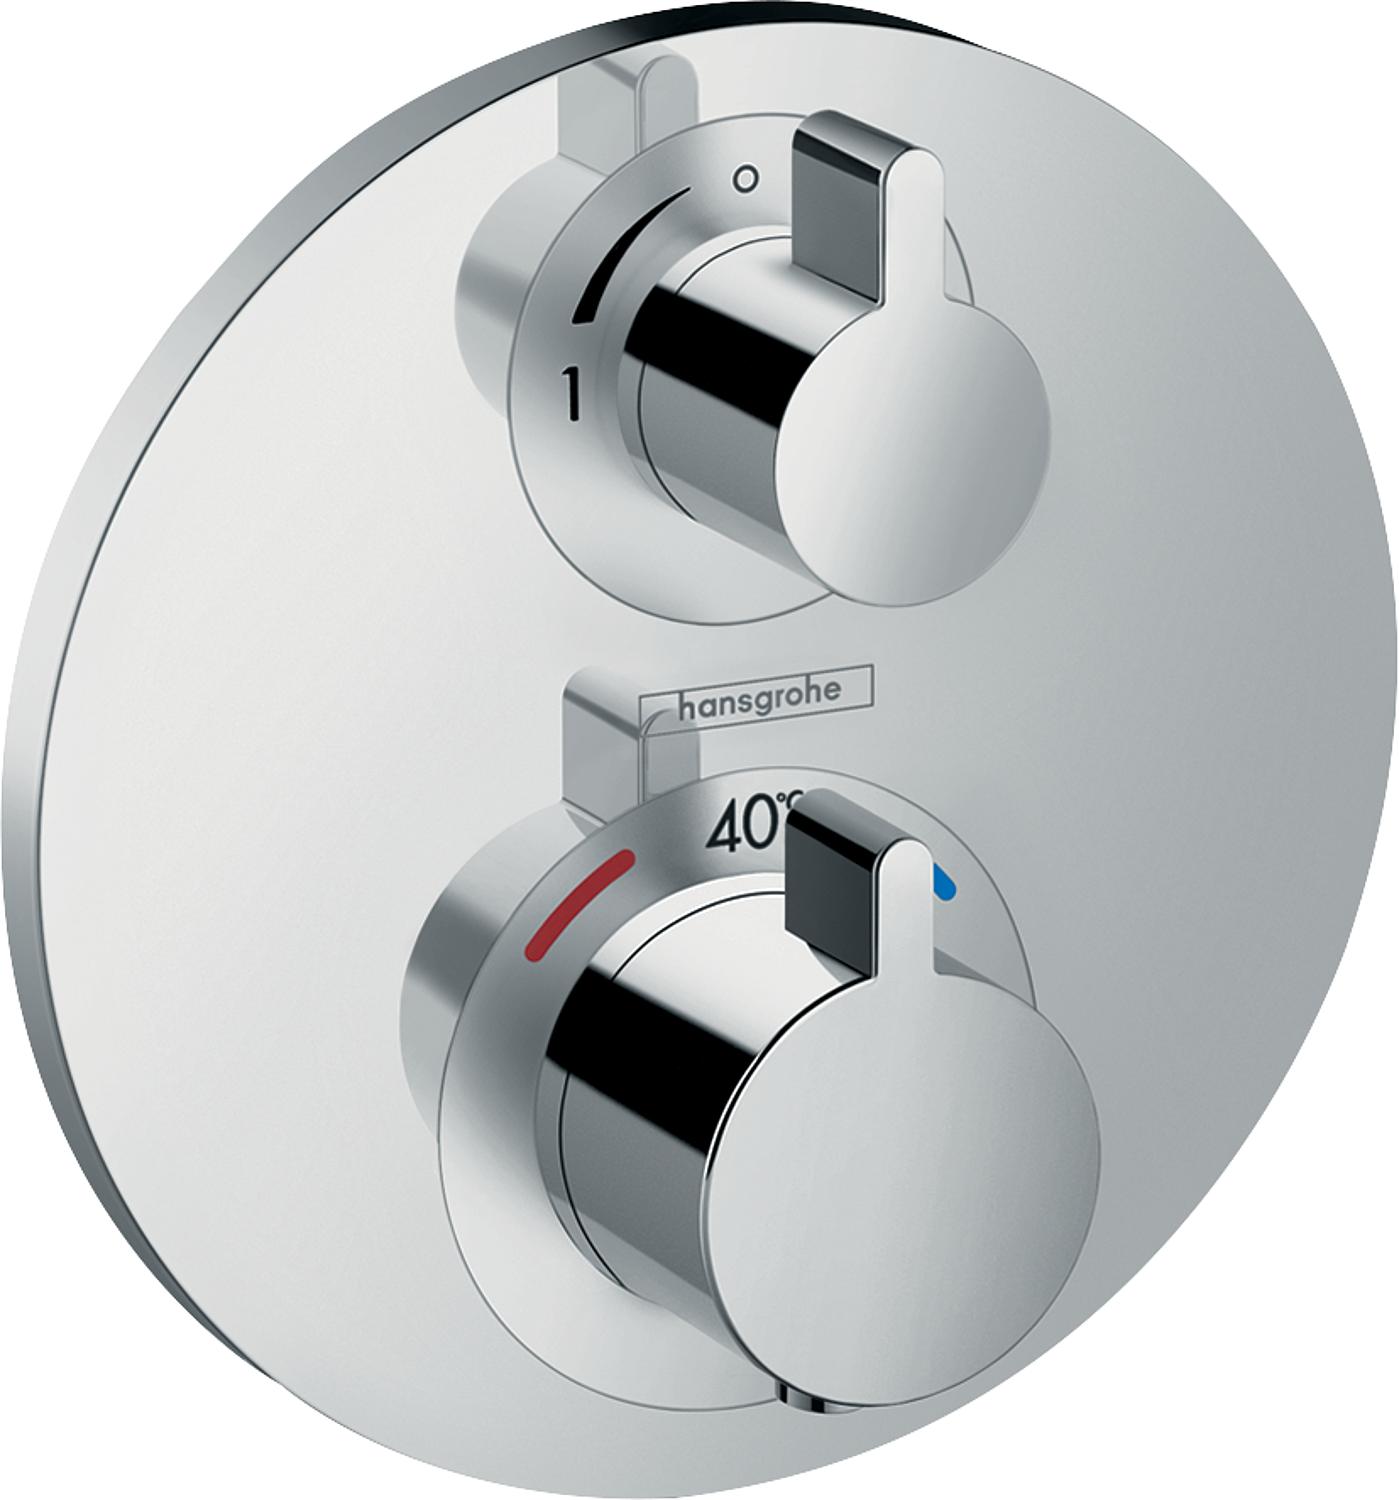 asdec life ® UP-Thermostat Hansgrohe Ecostat S, Fertigset 1 Verbraucher, chrom